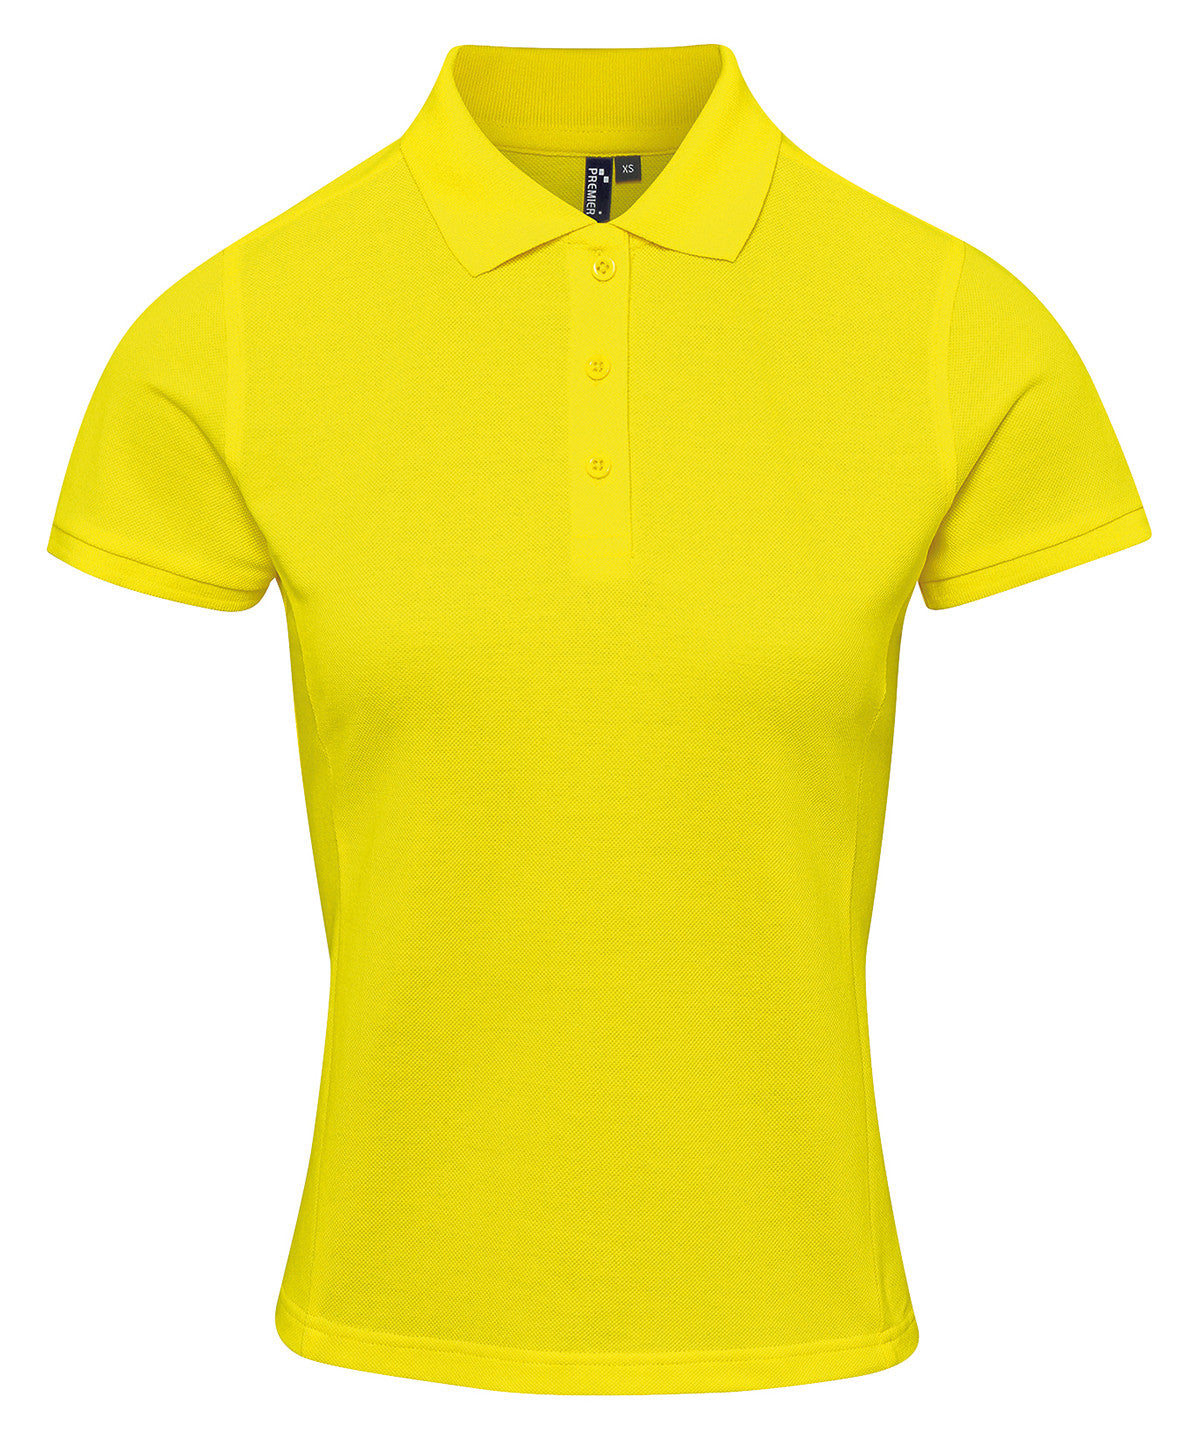 Personalised Polo Shirts - Burgundy Premier Women's Coolchecker® plus piqué polo